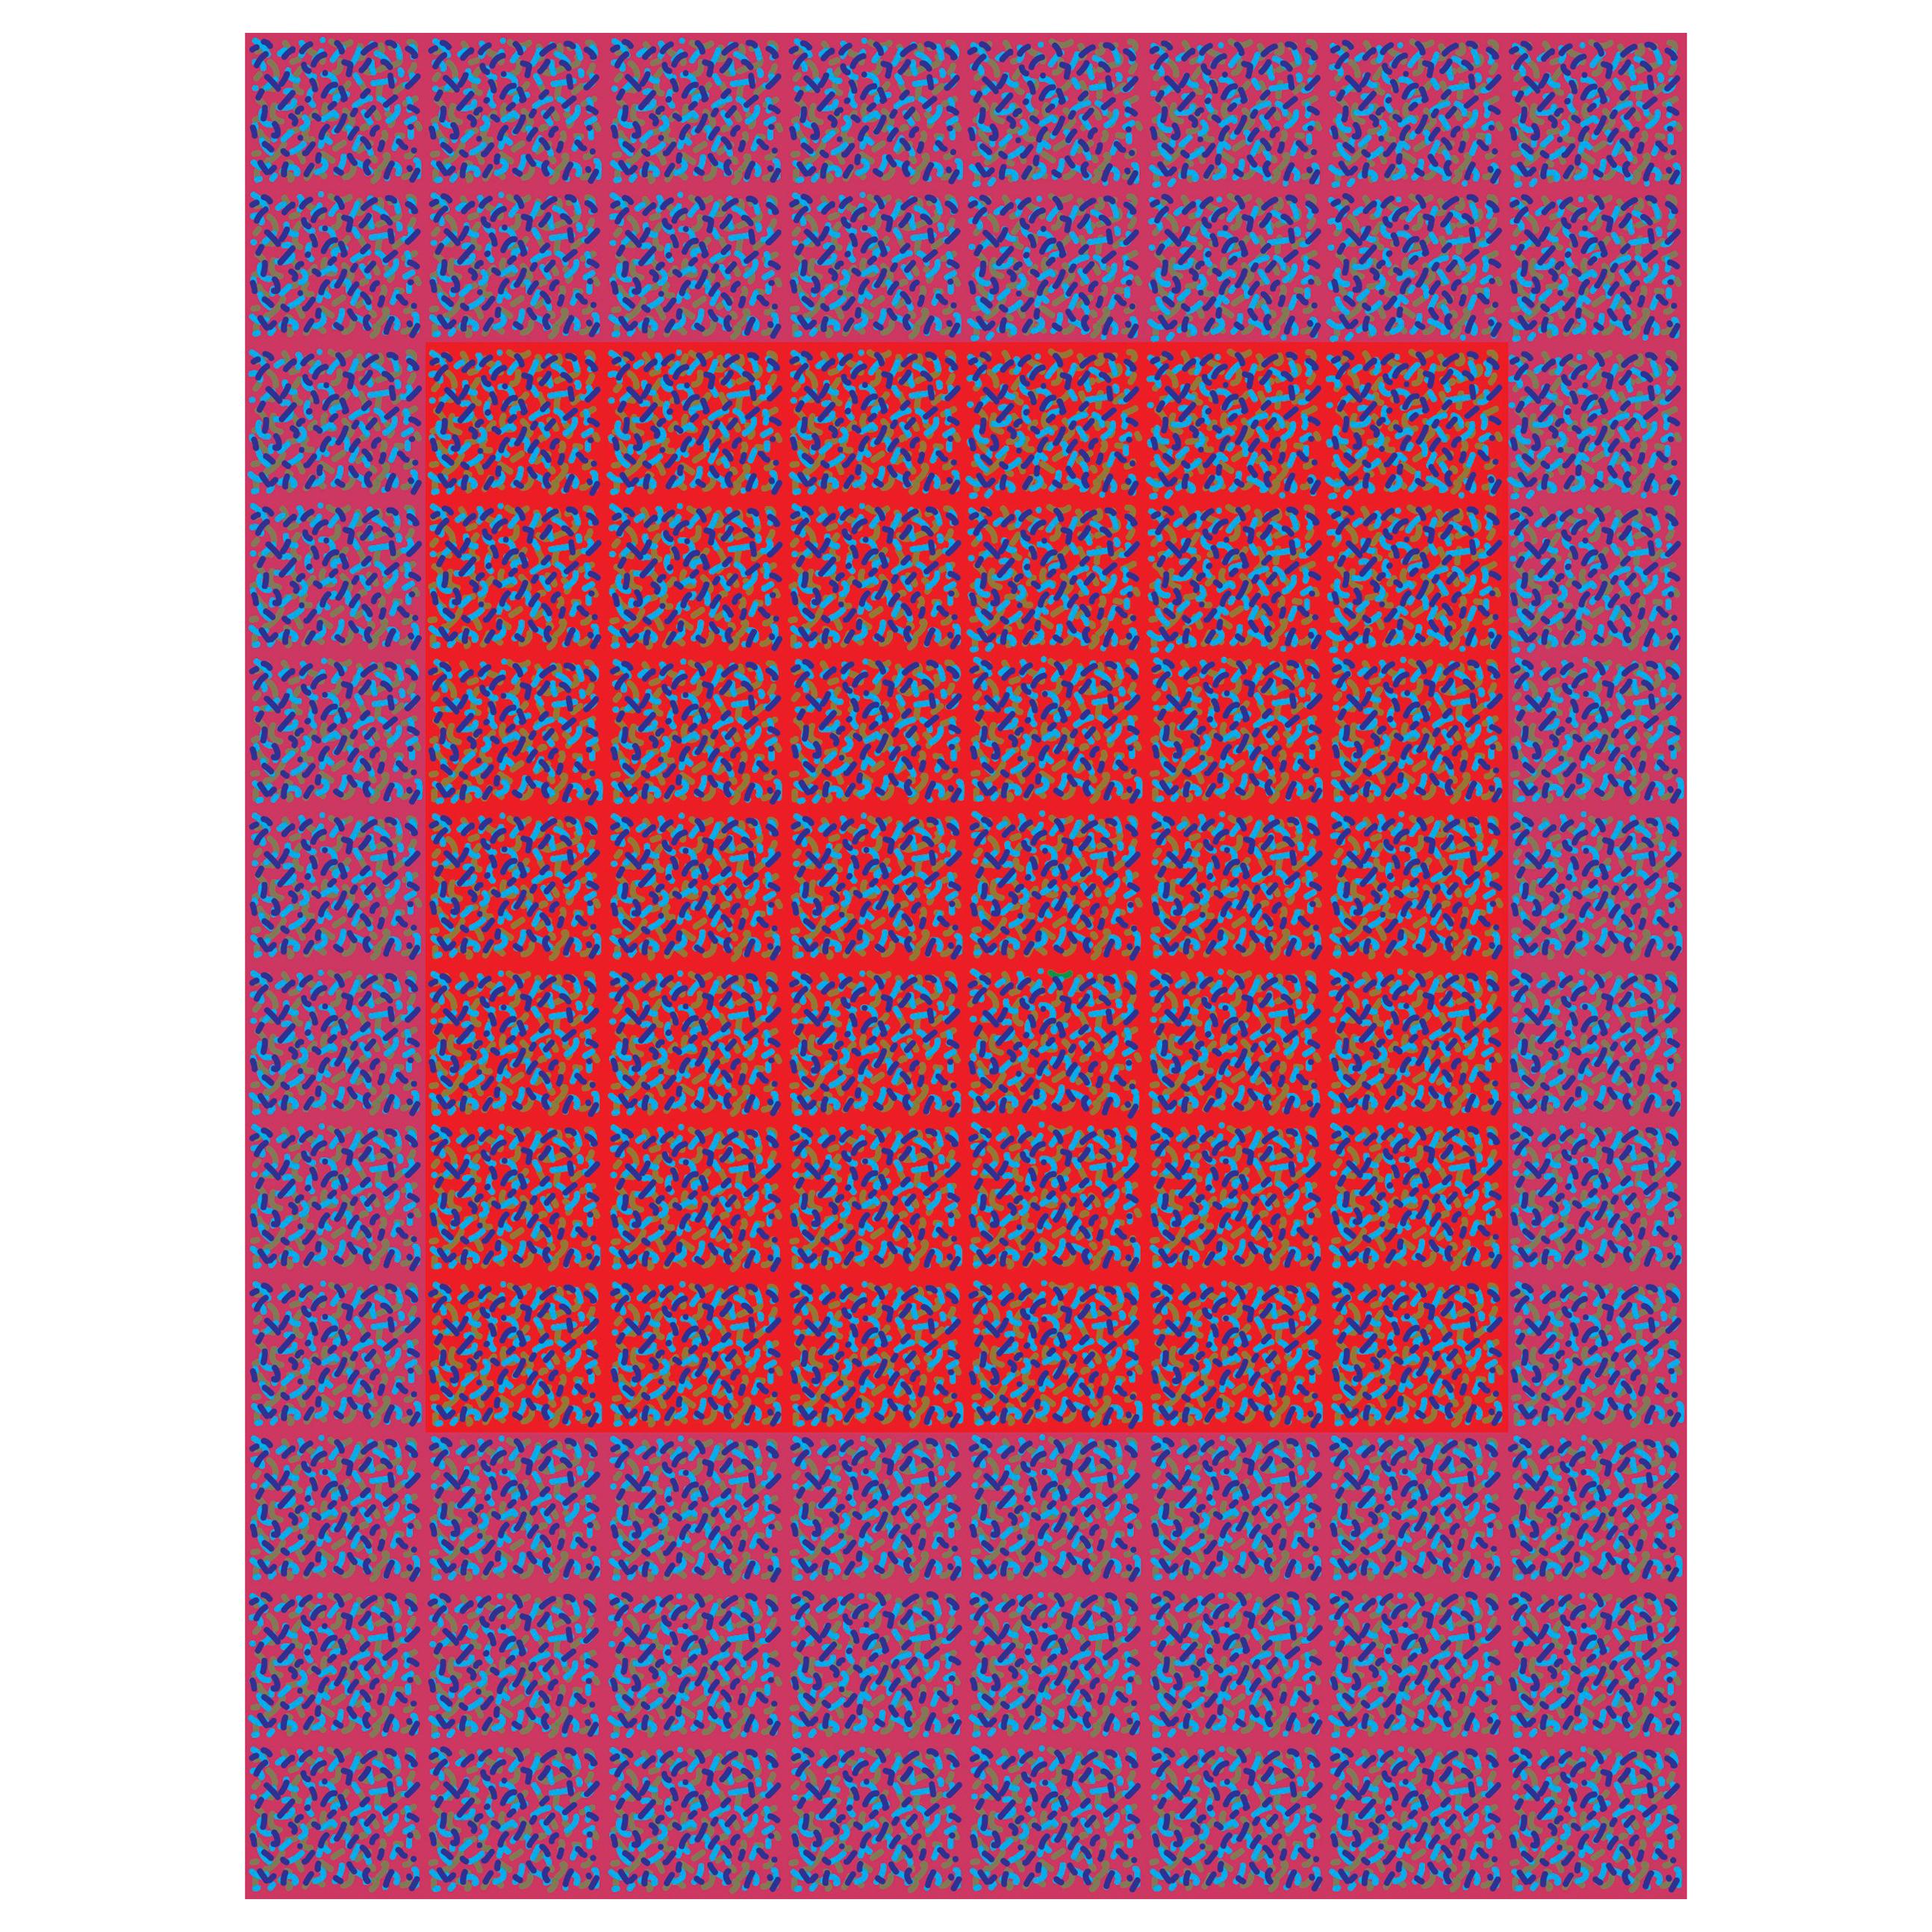 Michael Zenreich Konzeptualer abstrakter Digitaldruck ""Confetti Red Square V2""